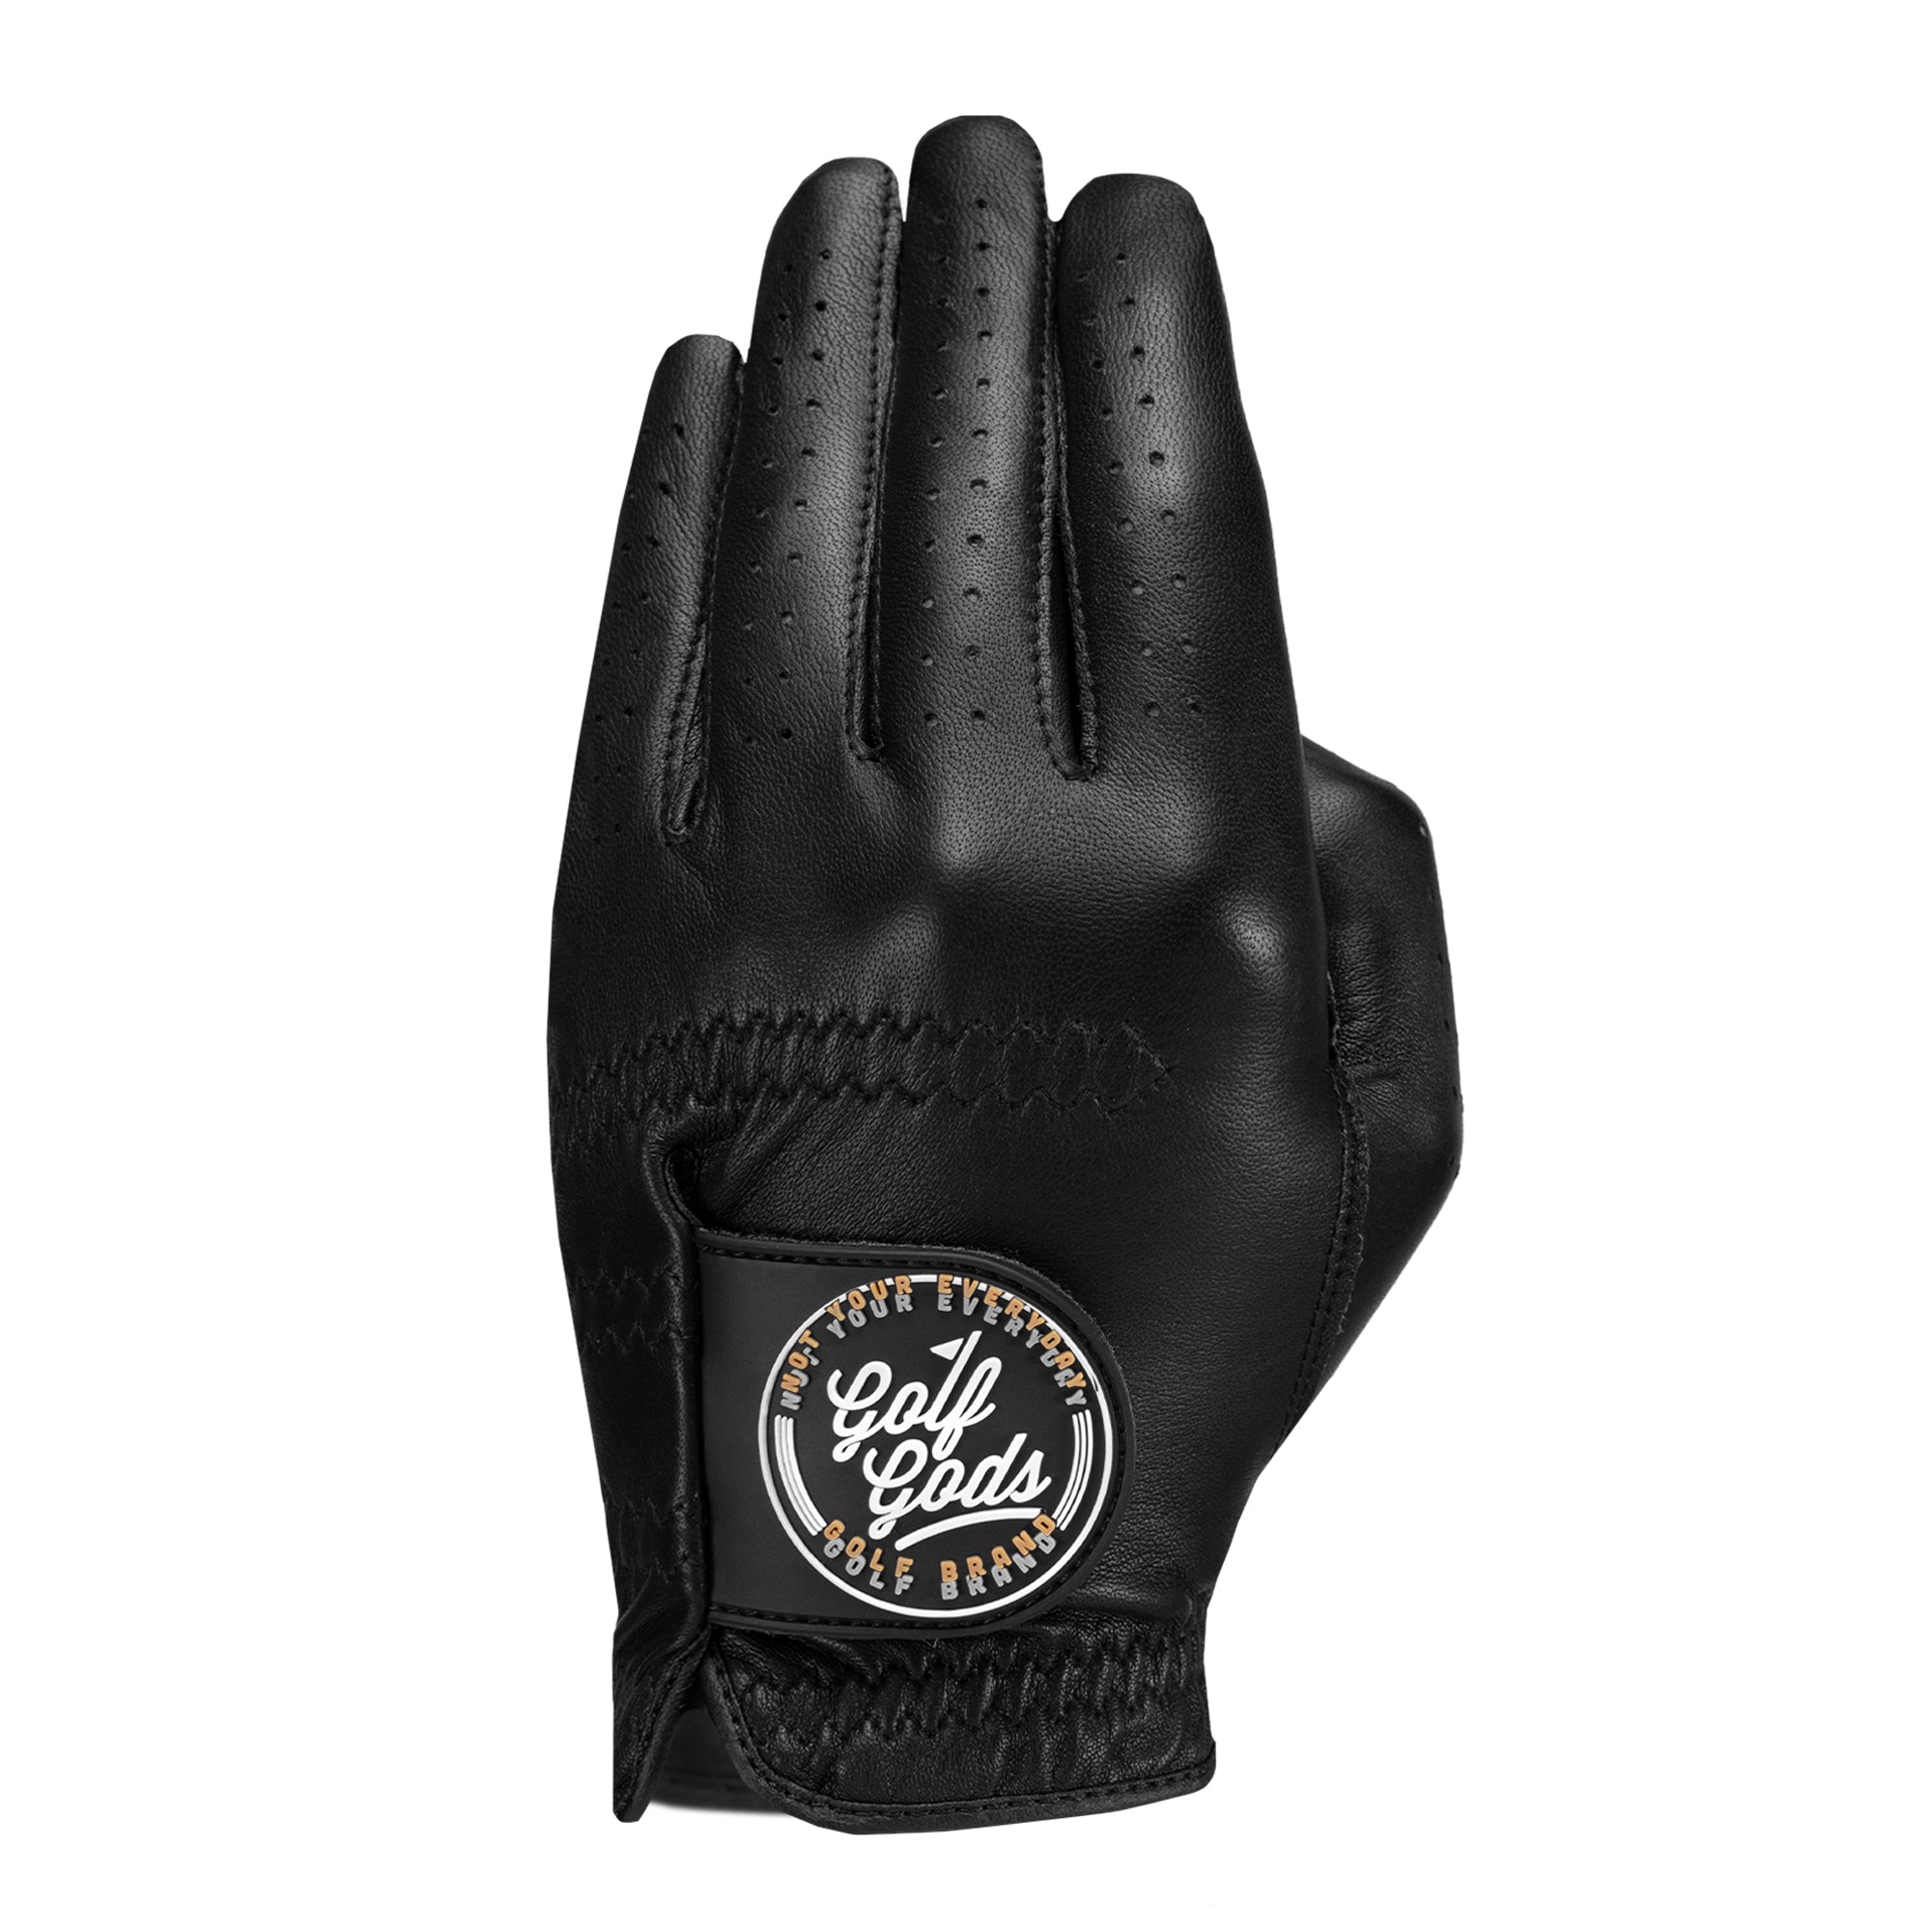 GOLF GODS Men's Black Cabretta Golf Glove Single Hand